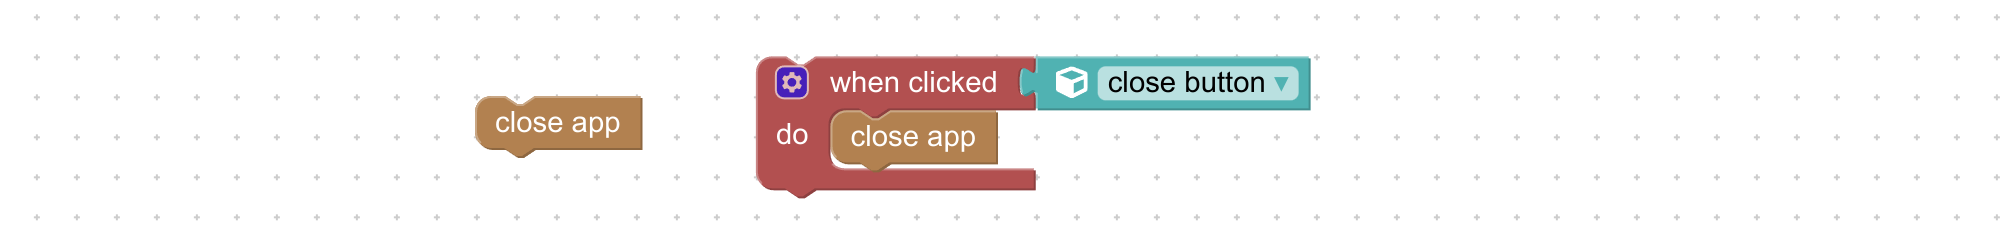 Visual logic block to close the app